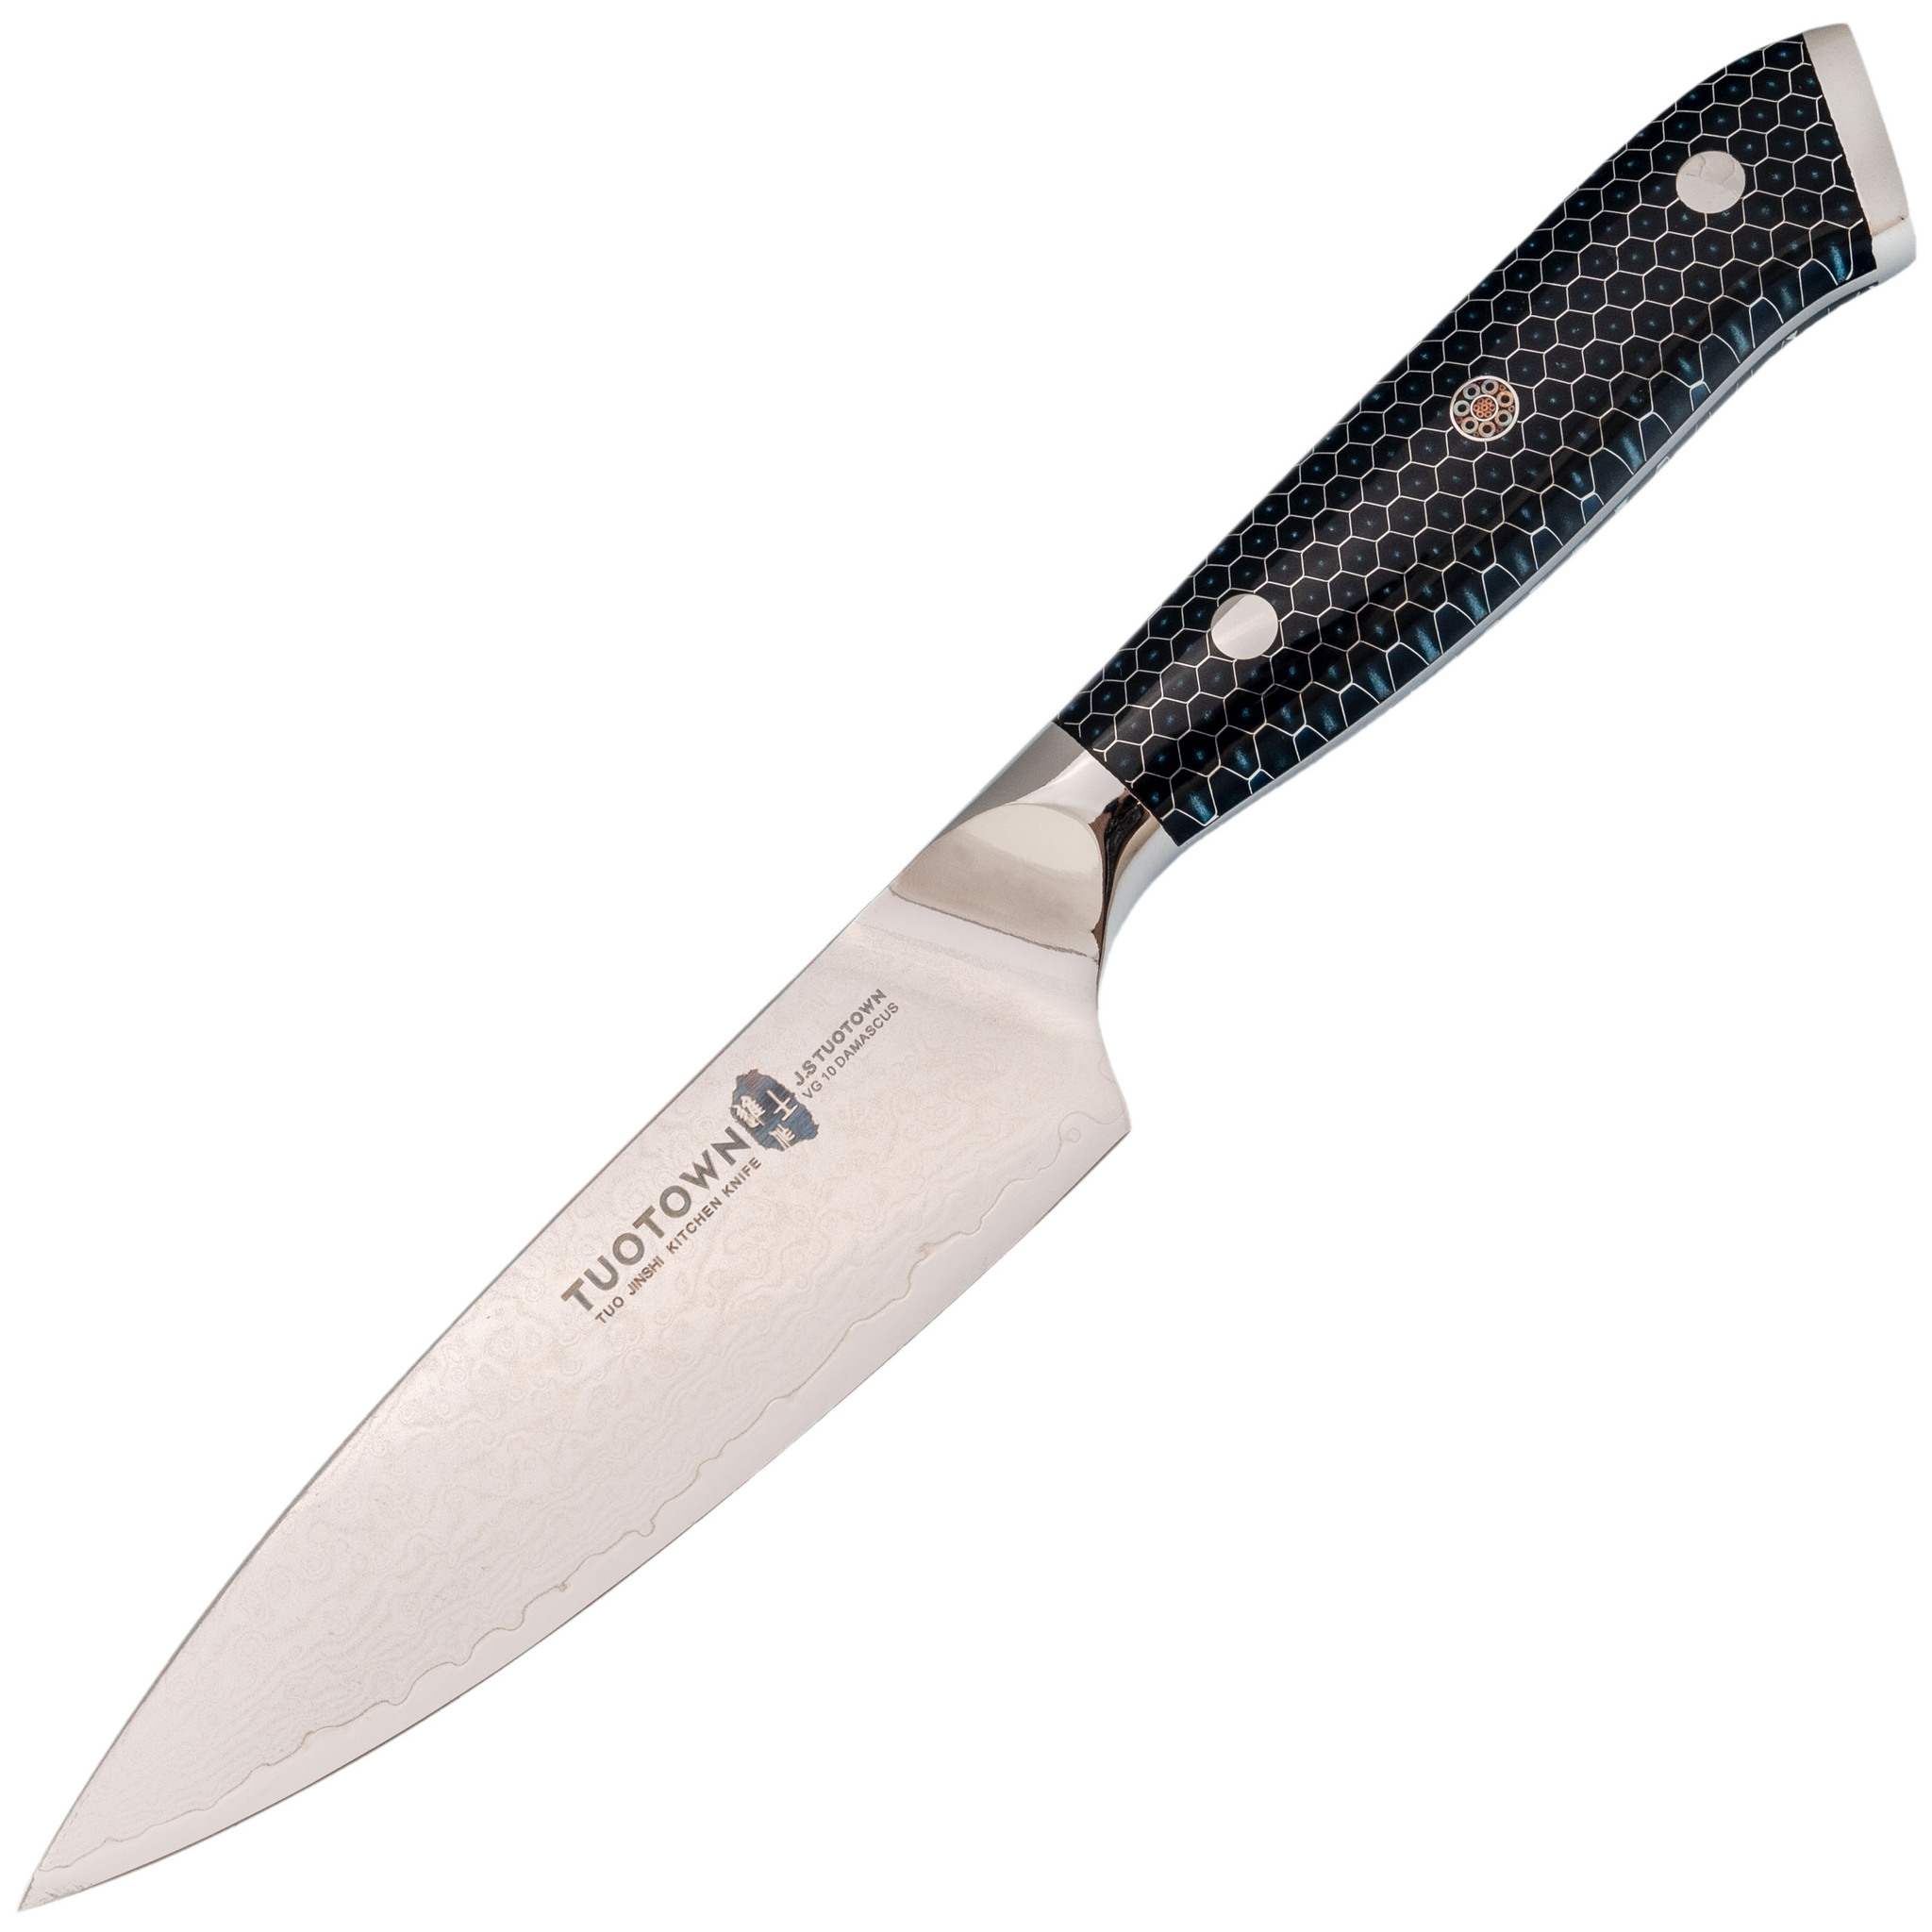 Кухонный нож Tuotown, сталь VG10, обкладка Damascus, рукоять акрил, синий - фото 1